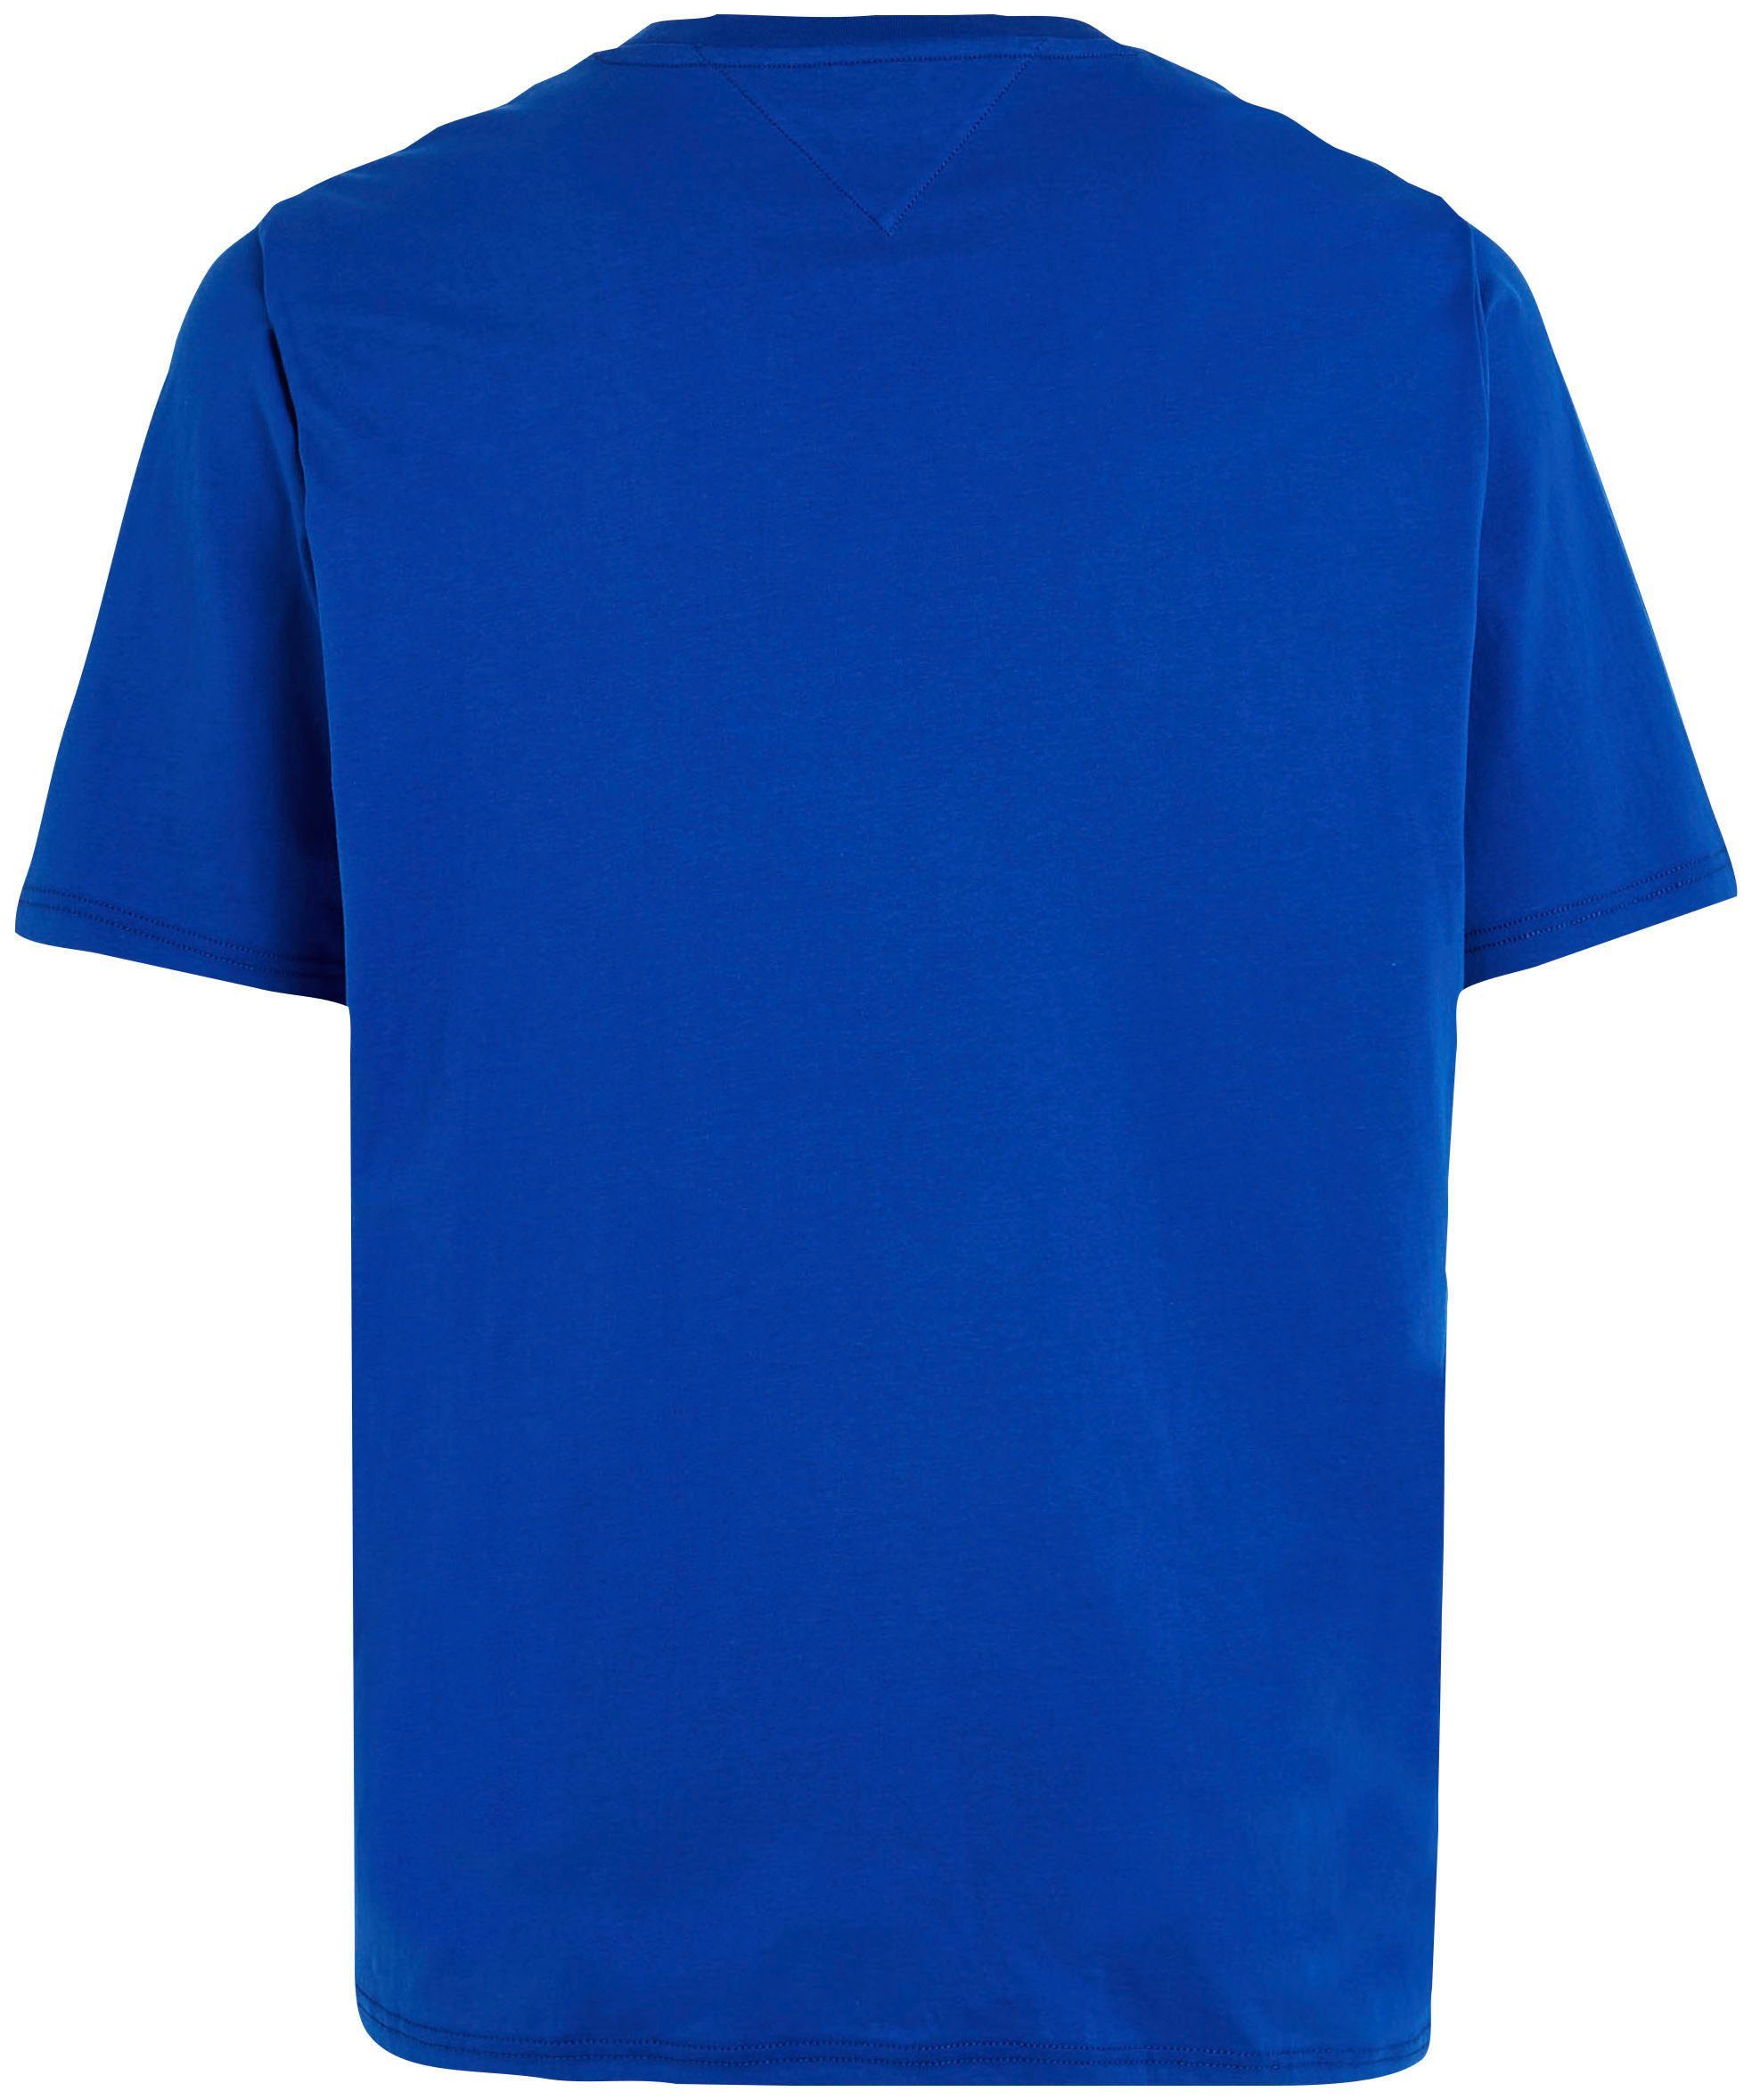 TJM Blue mit PLUS TEE Plus Print der T-Shirt GRAPHIC Tommy Jeans Ultra auf ESSENTIAL Brust